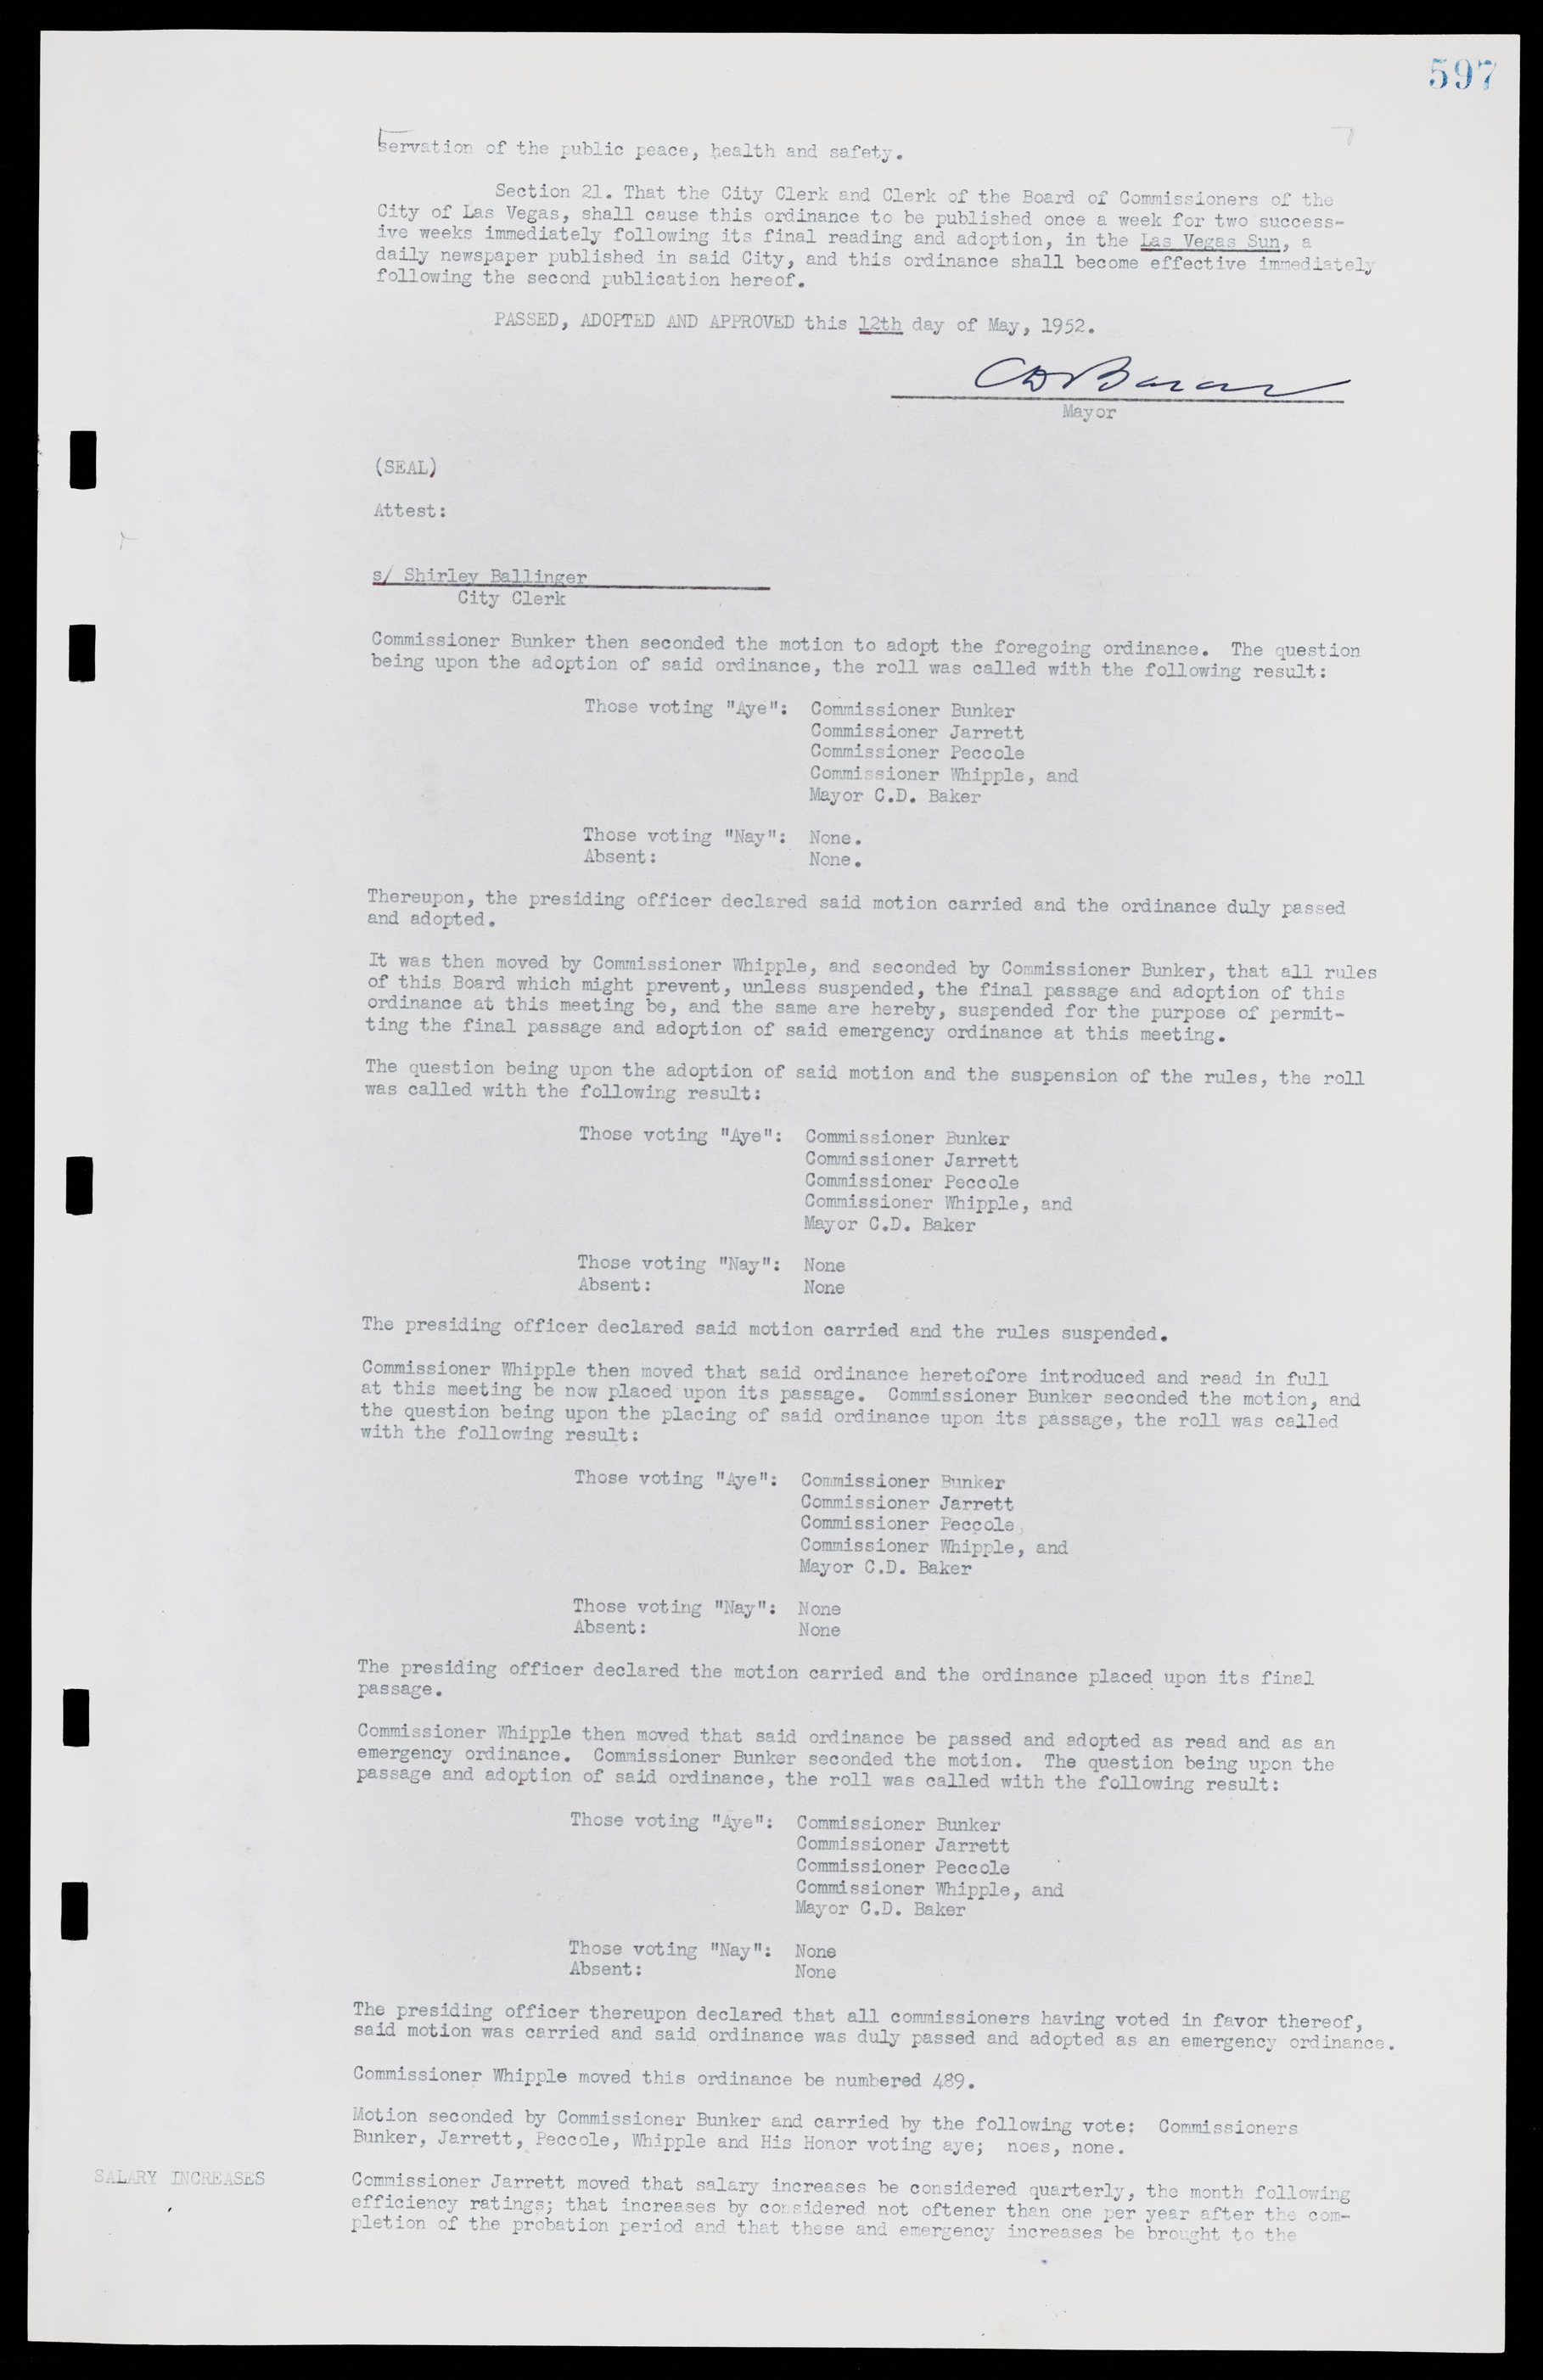 Las Vegas City Commission Minutes, November 7, 1949 to May 21, 1952, lvc000007-615